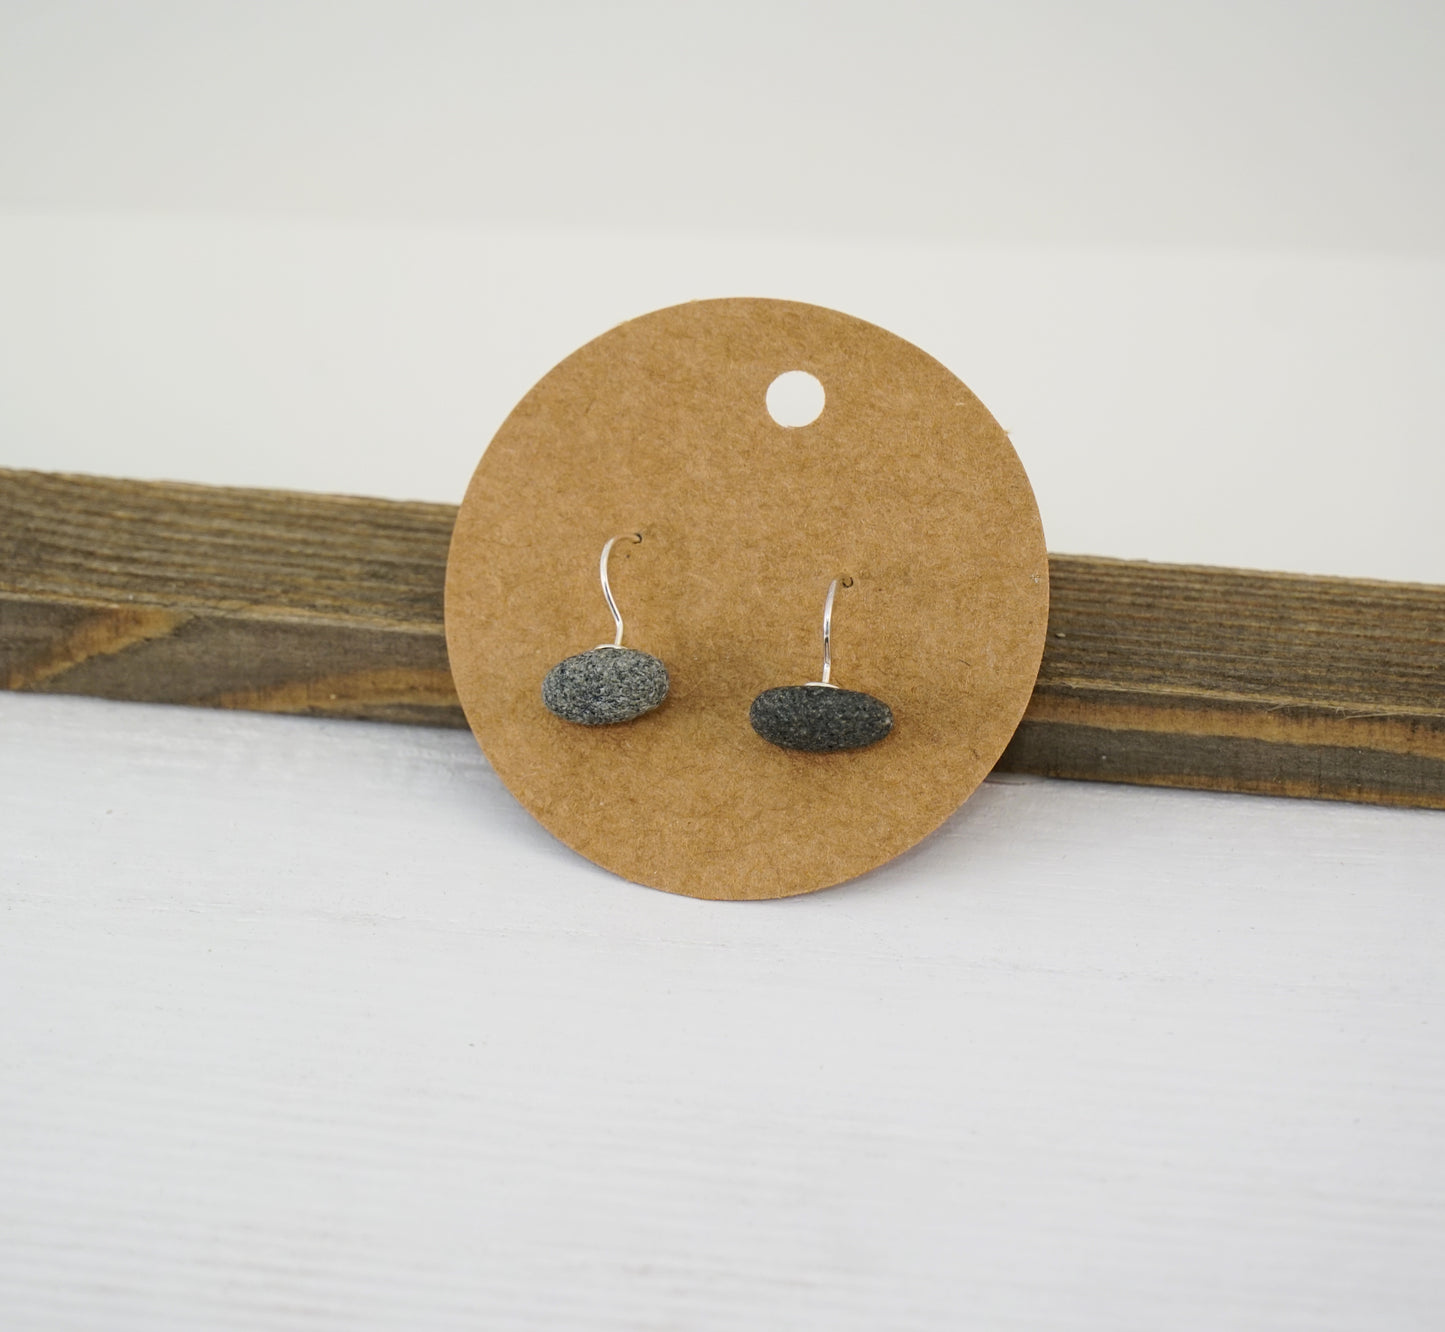 Miniature Beach Pebble Earring Pair - Natural Stones on Silver Hooks